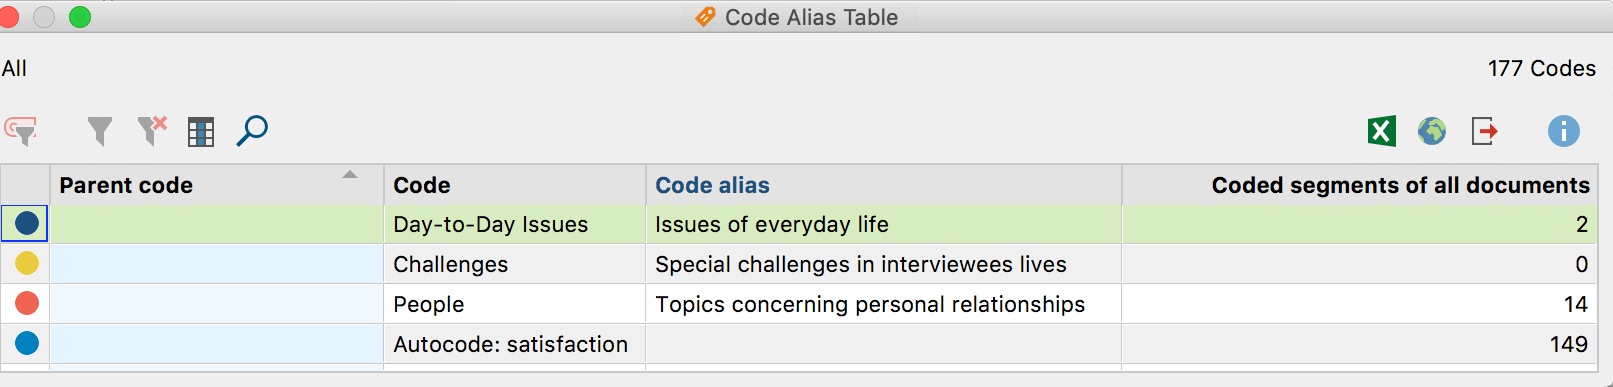 Code Alias Table